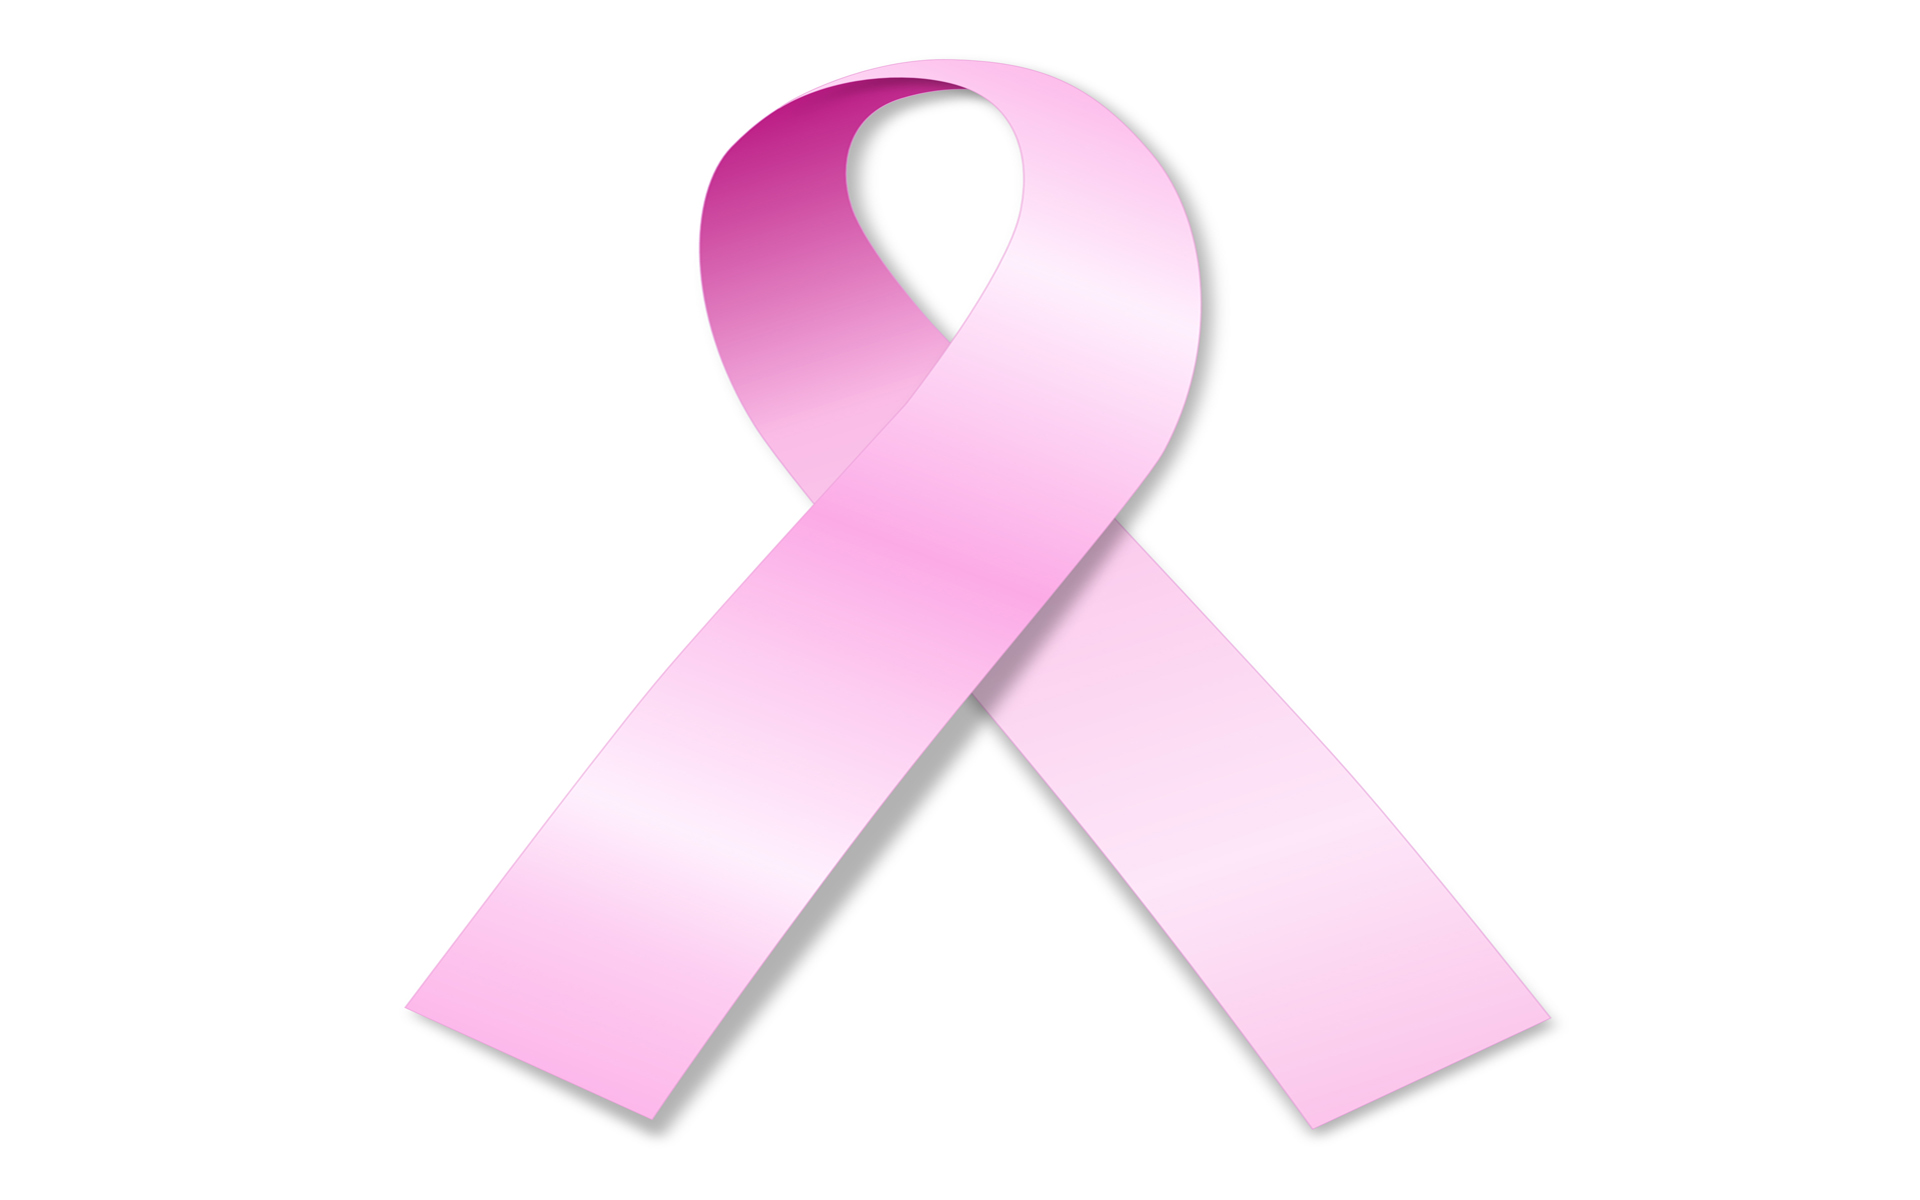 Breast Cancer Awareness Wallpaper